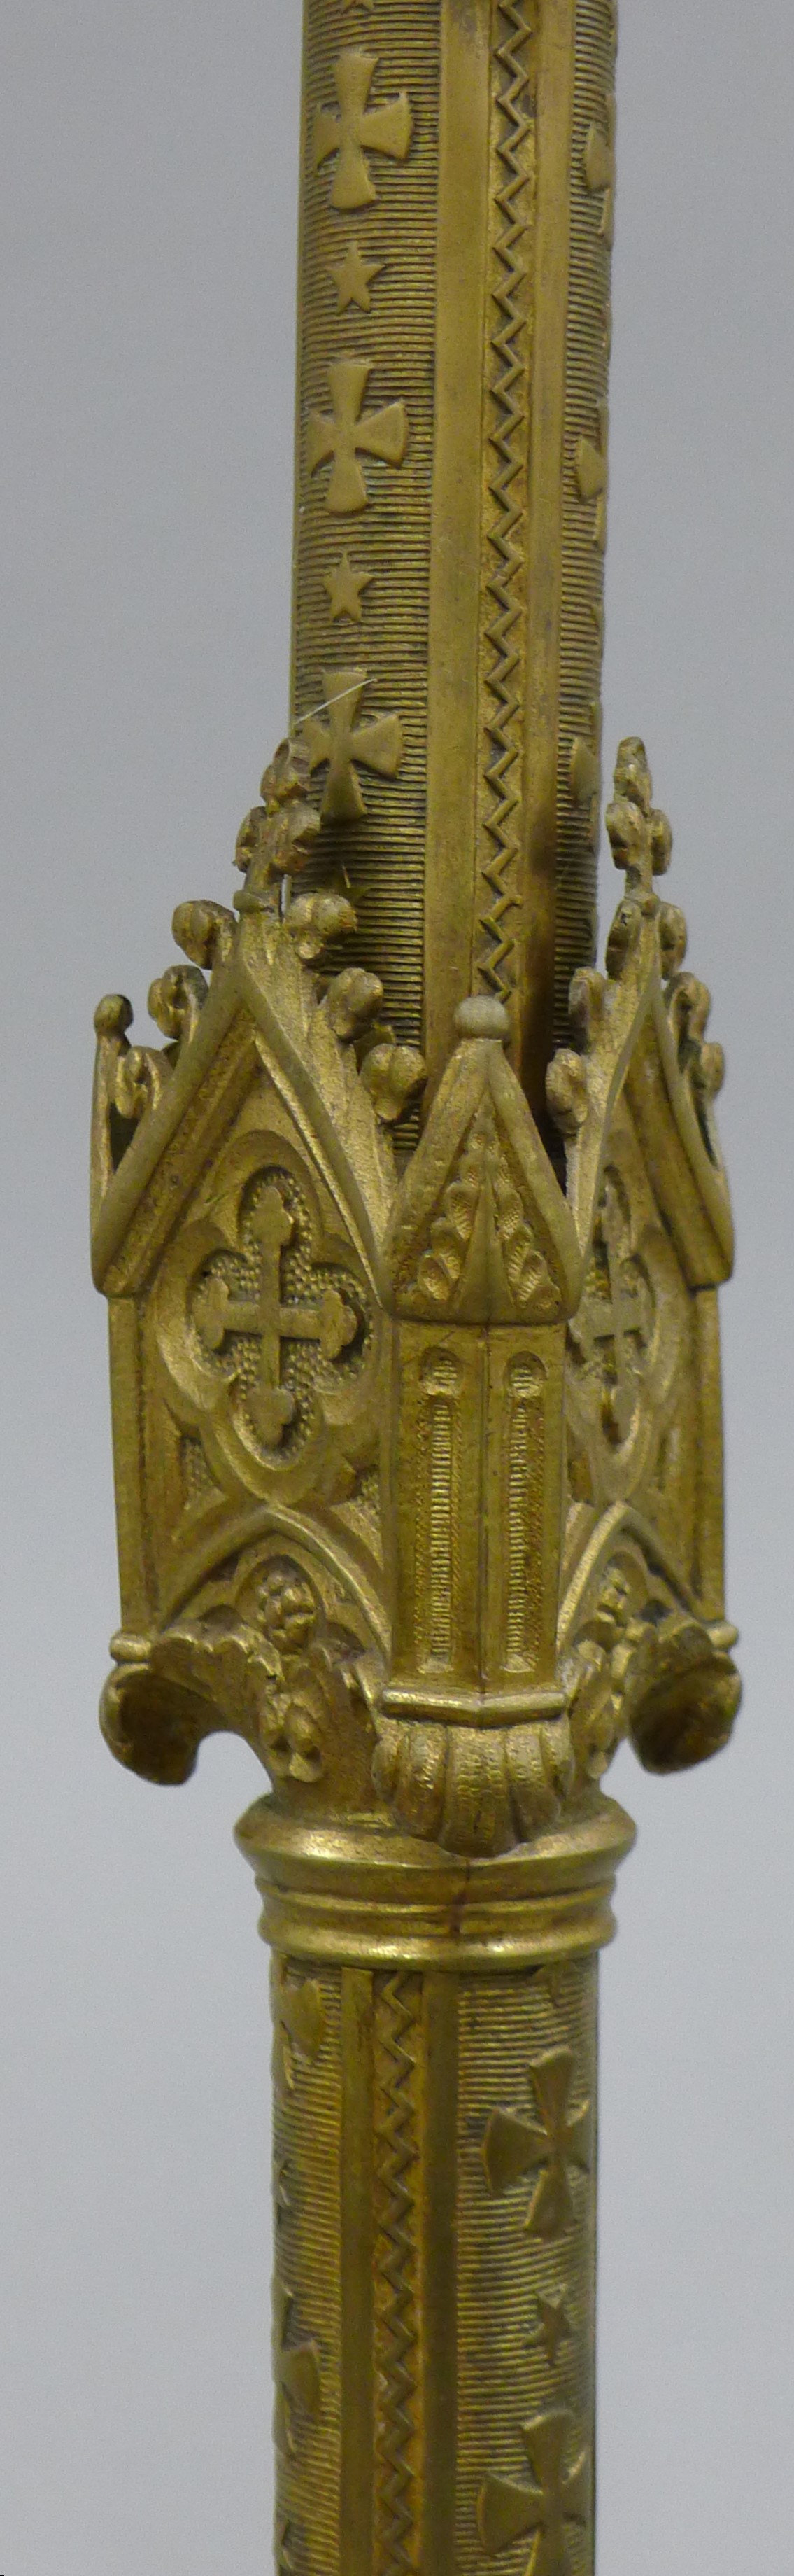 A pair of ornate brass altar candlesticks. 56 cm high. - Image 4 of 6